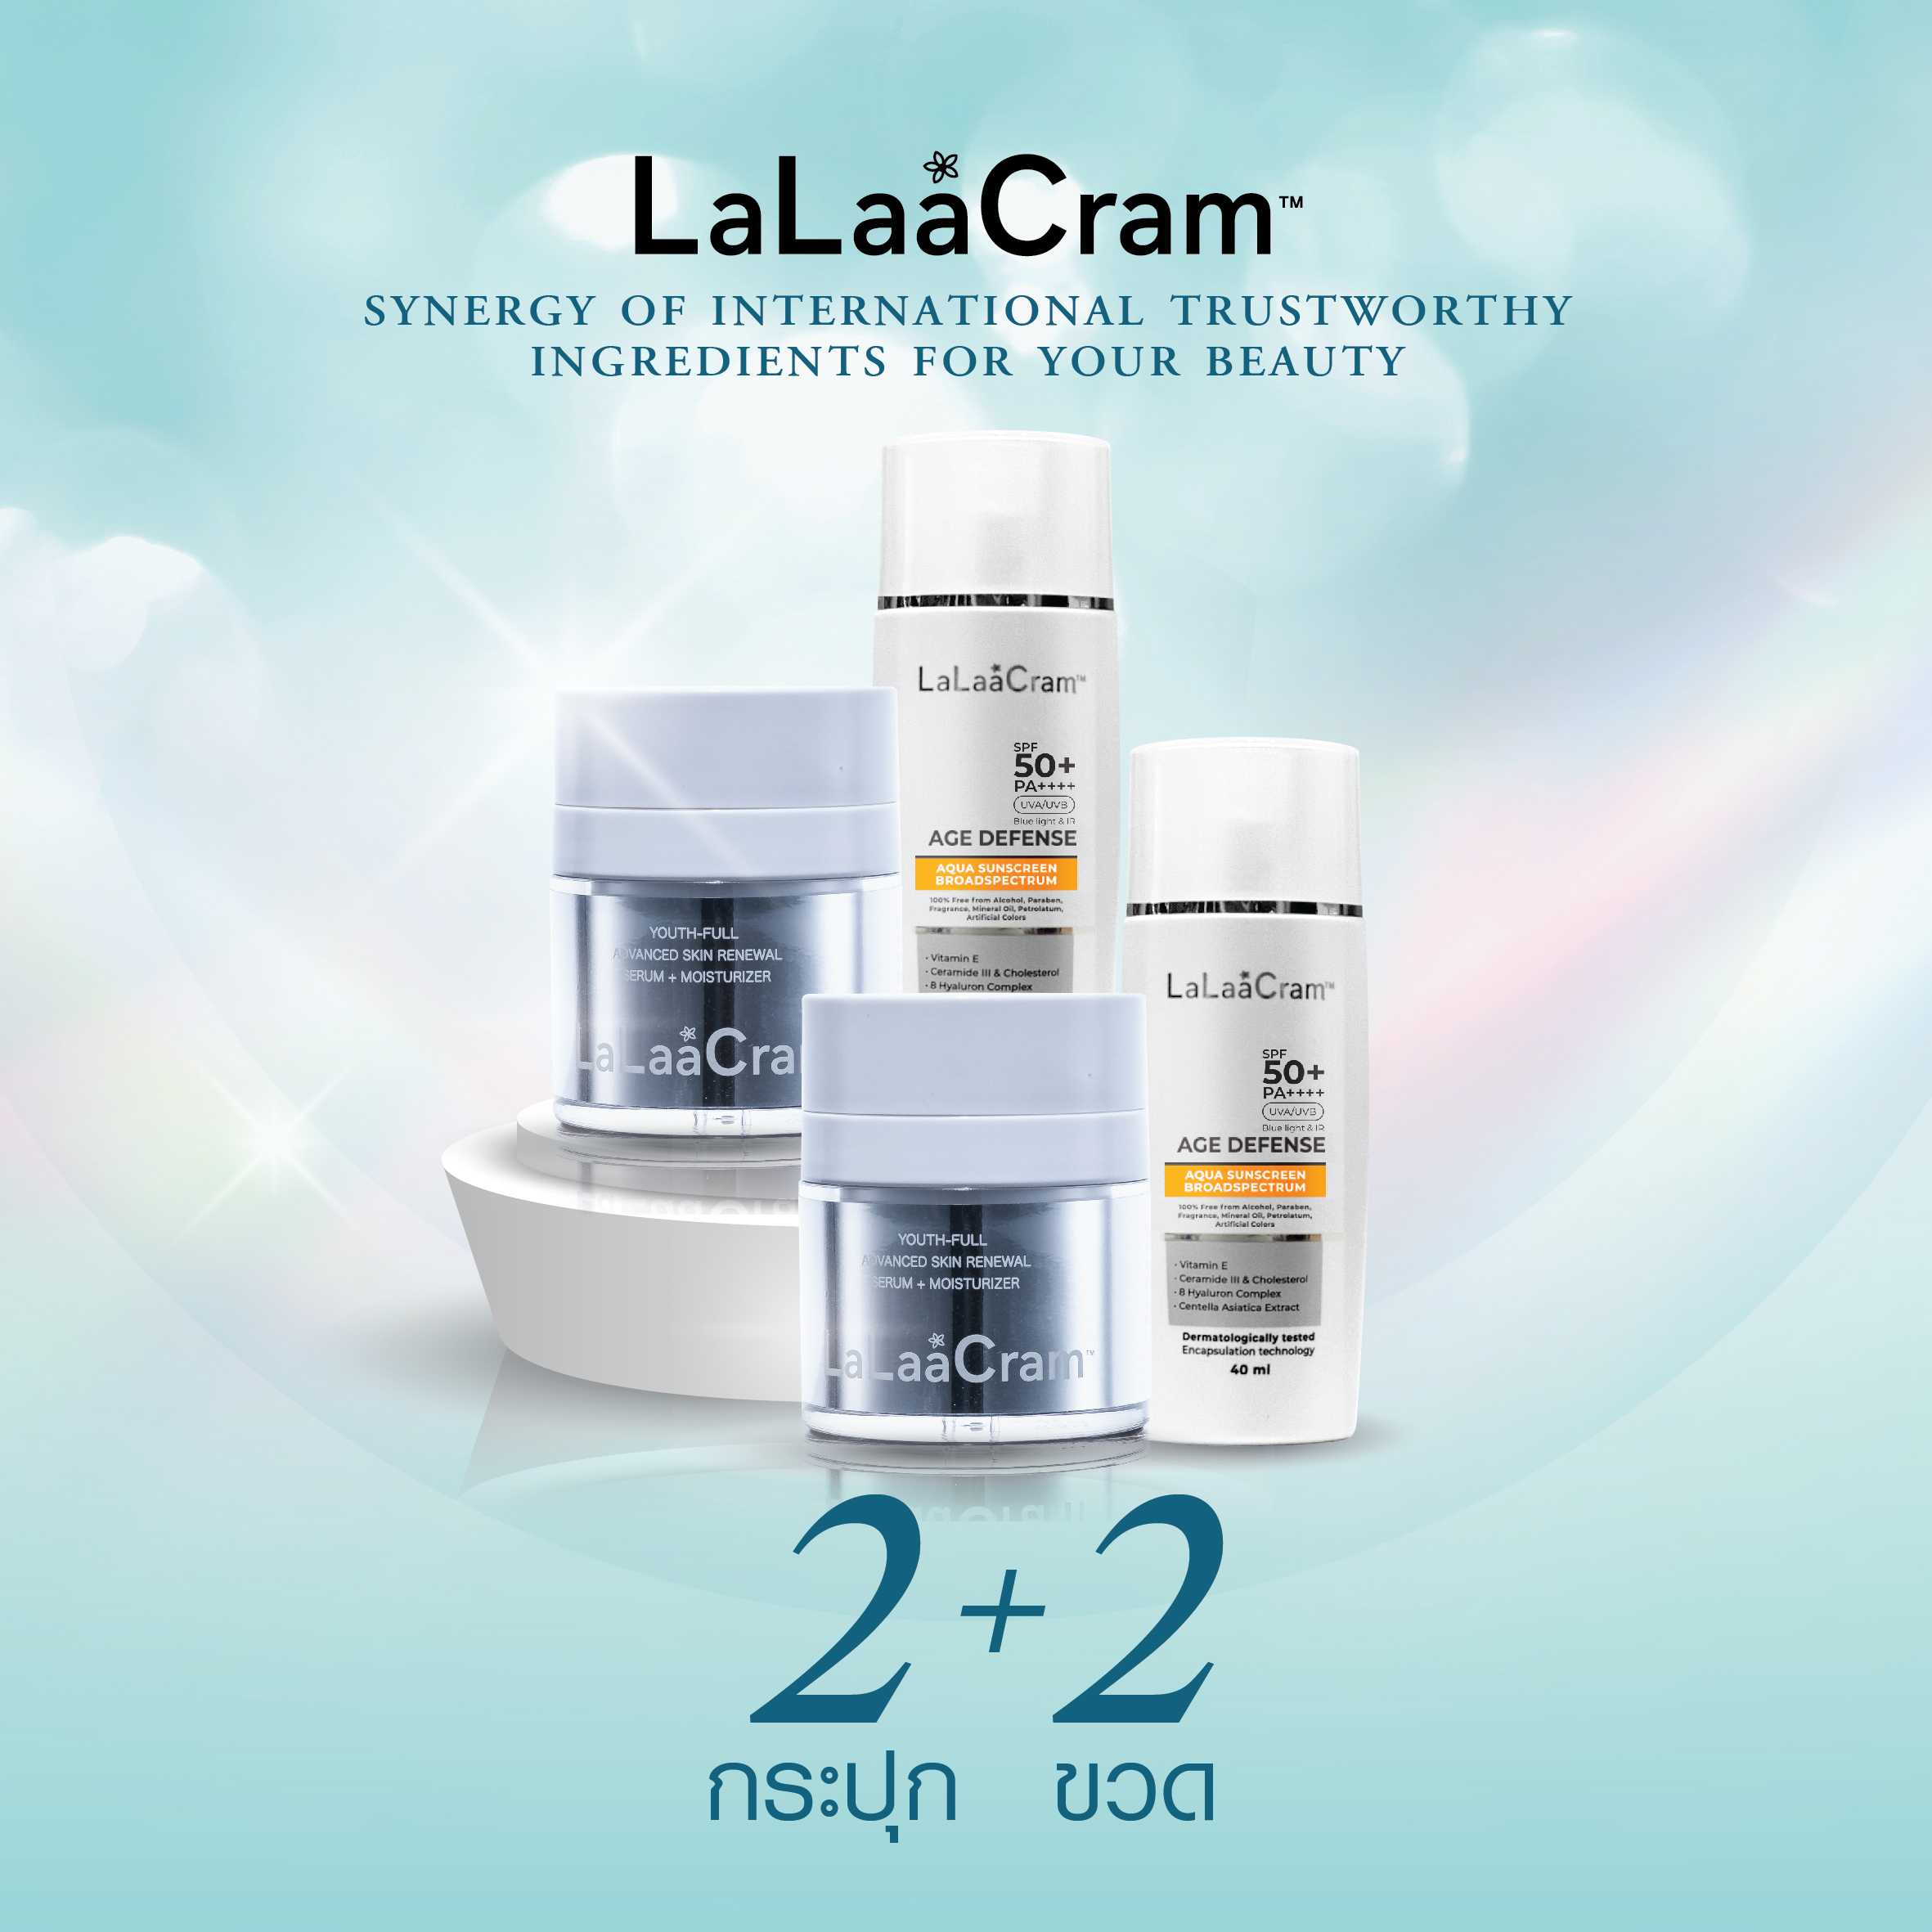 LaLaaCram Youth-Full Advanced Skin Renewal Serum + Moisturizer x 2 + Sunscreen x 2